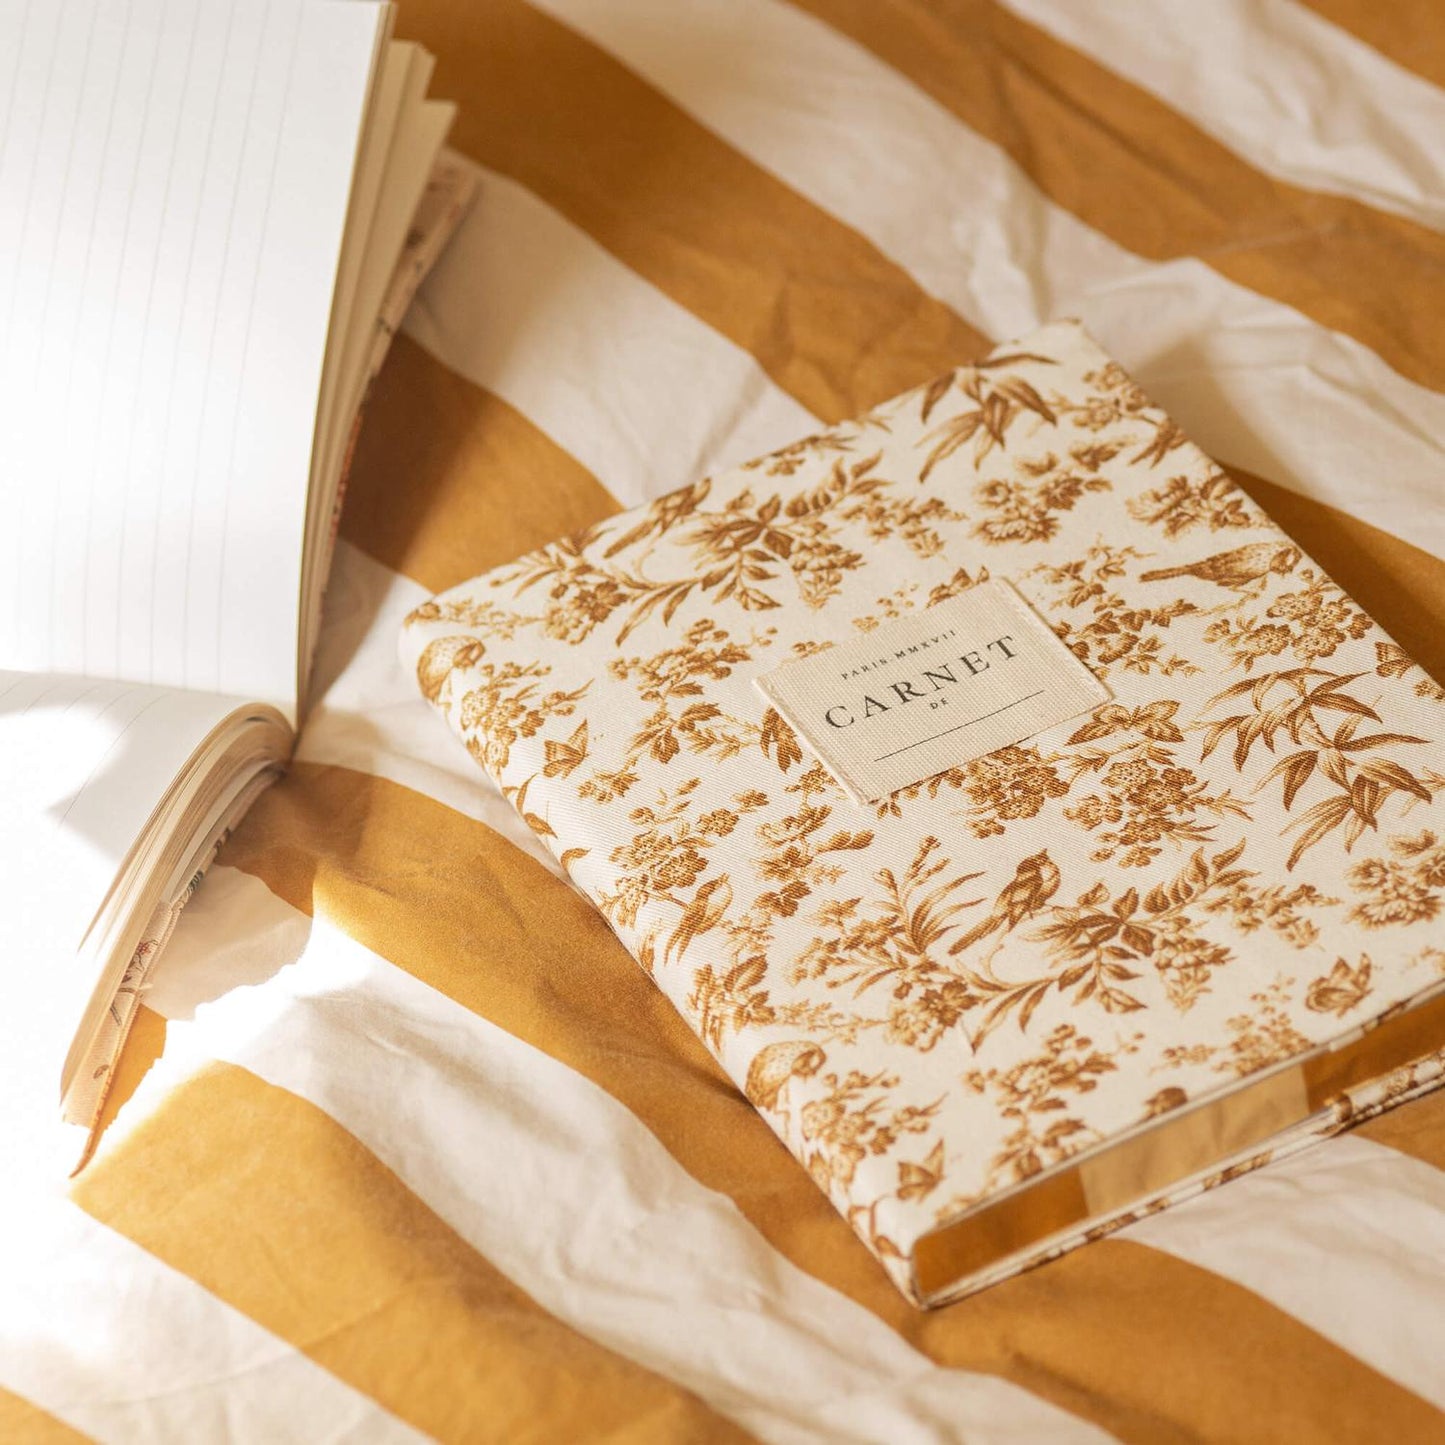 Notesbog - Golden Paradise Notebook